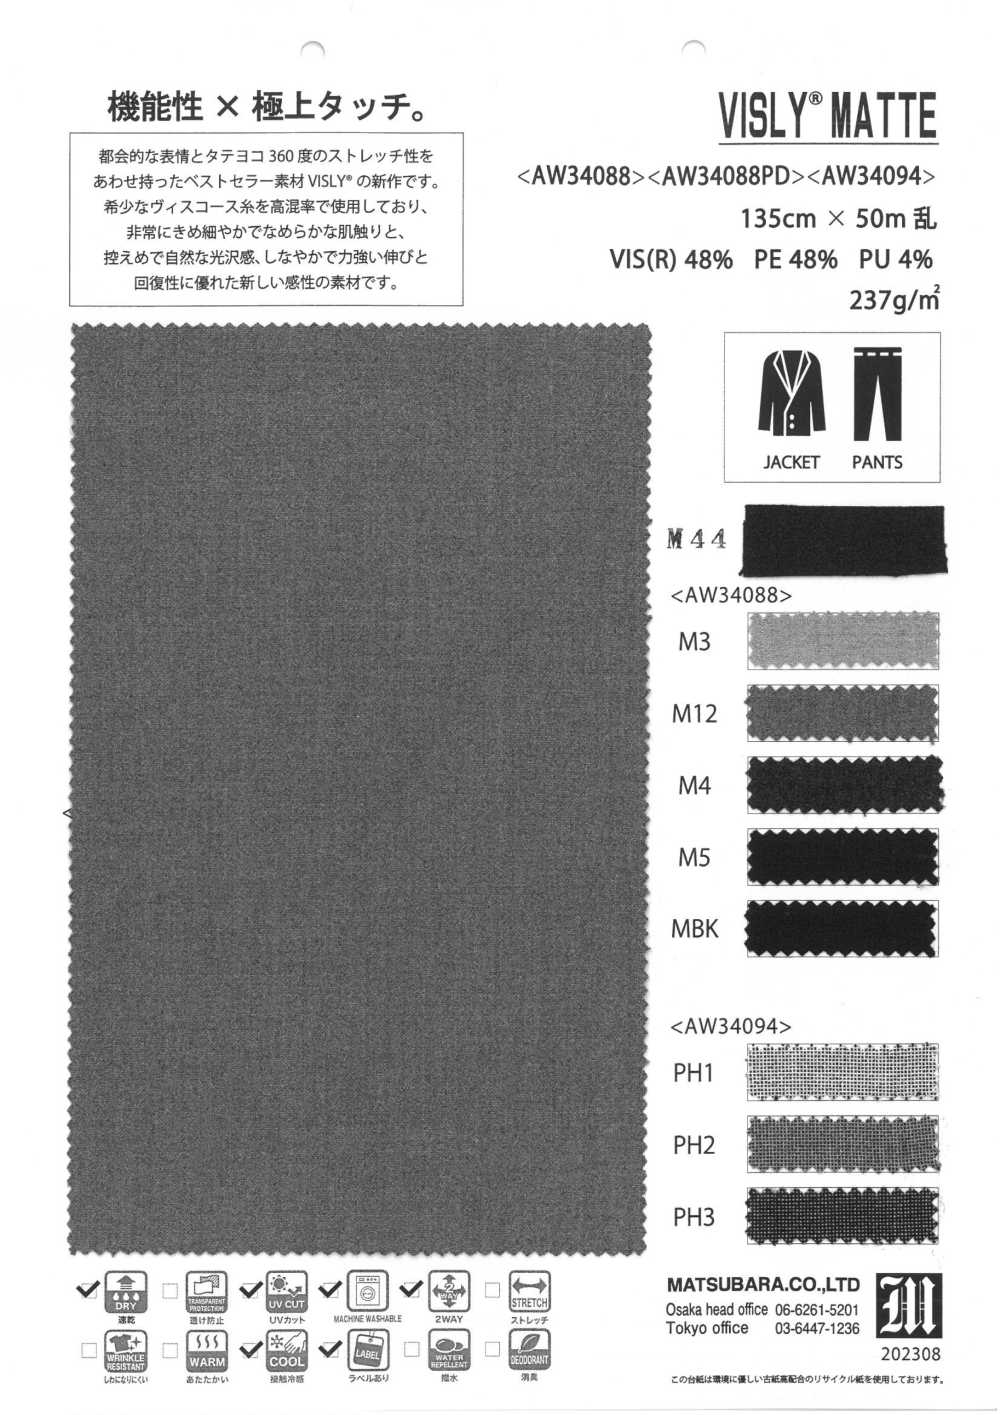 AW34094 VISLY®️MATTE[Textilgewebe] Matsubara